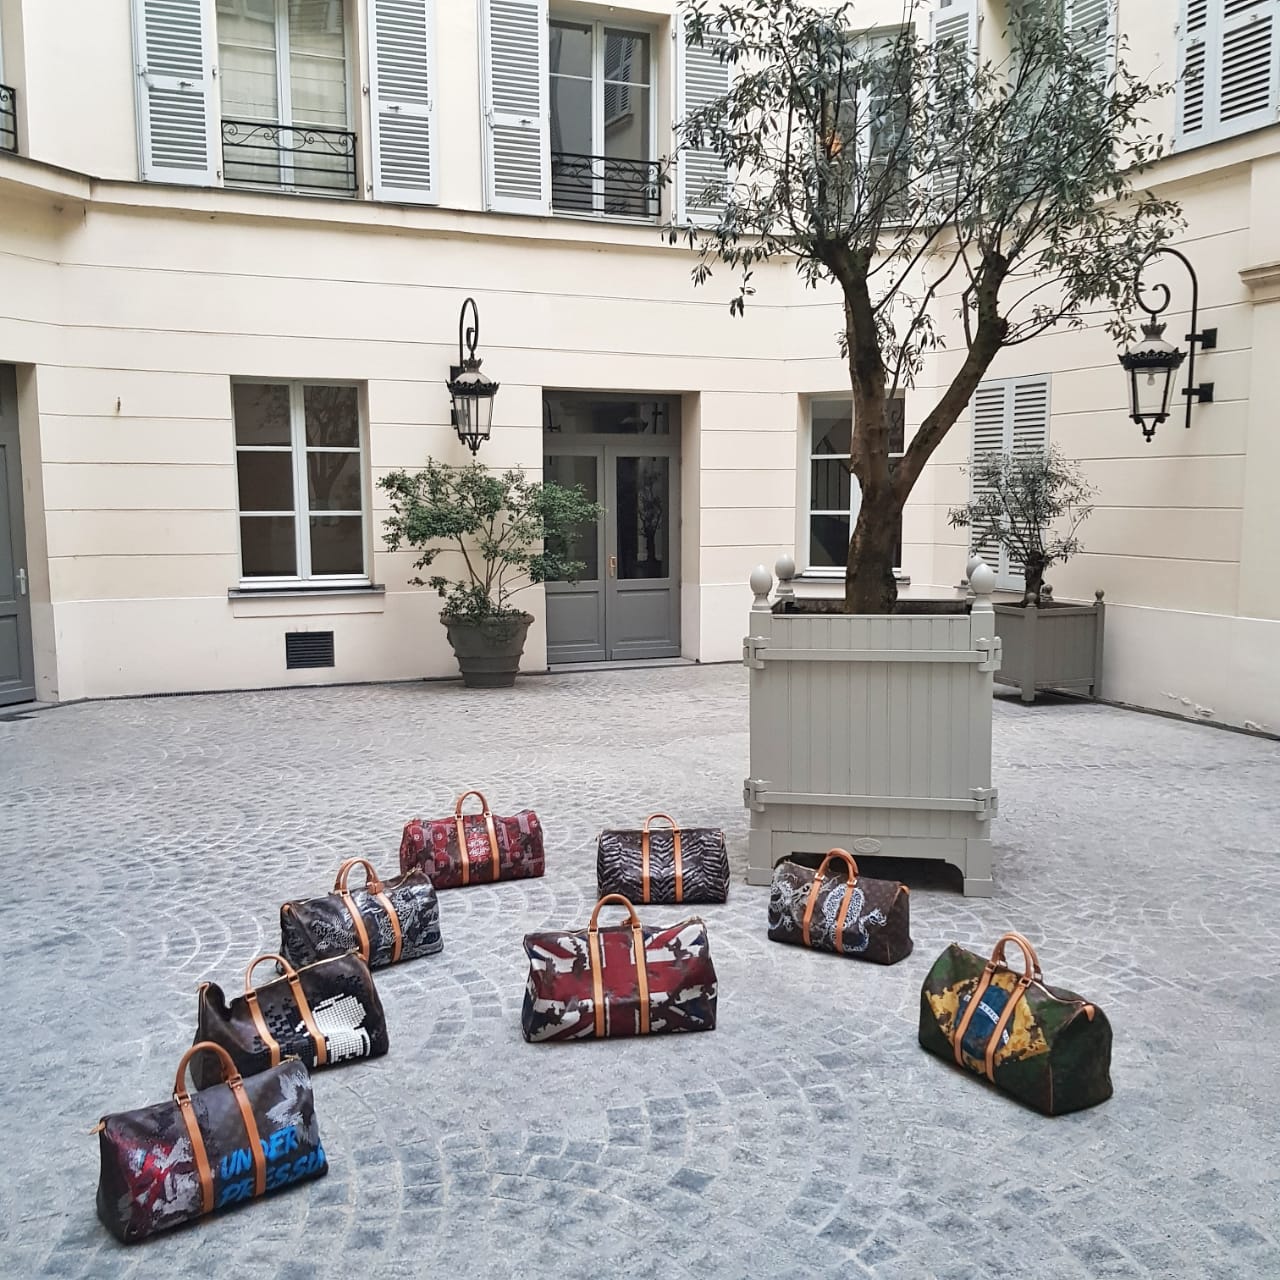 Bag Review: Versace Palazzo Empire Bag – The Bag Hag Diaries